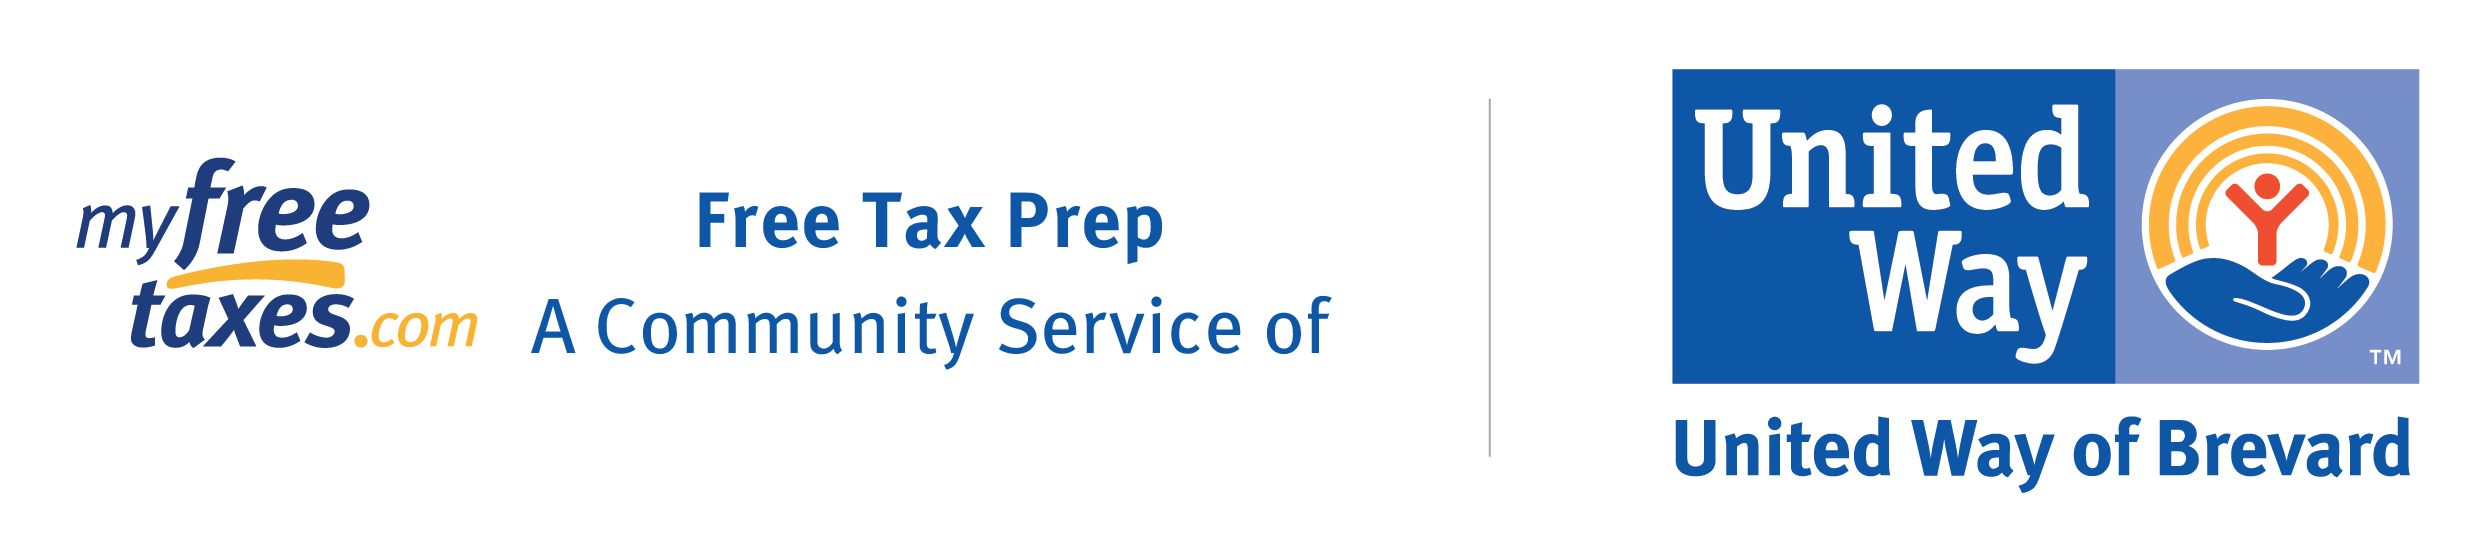 Free Tax Prep logo